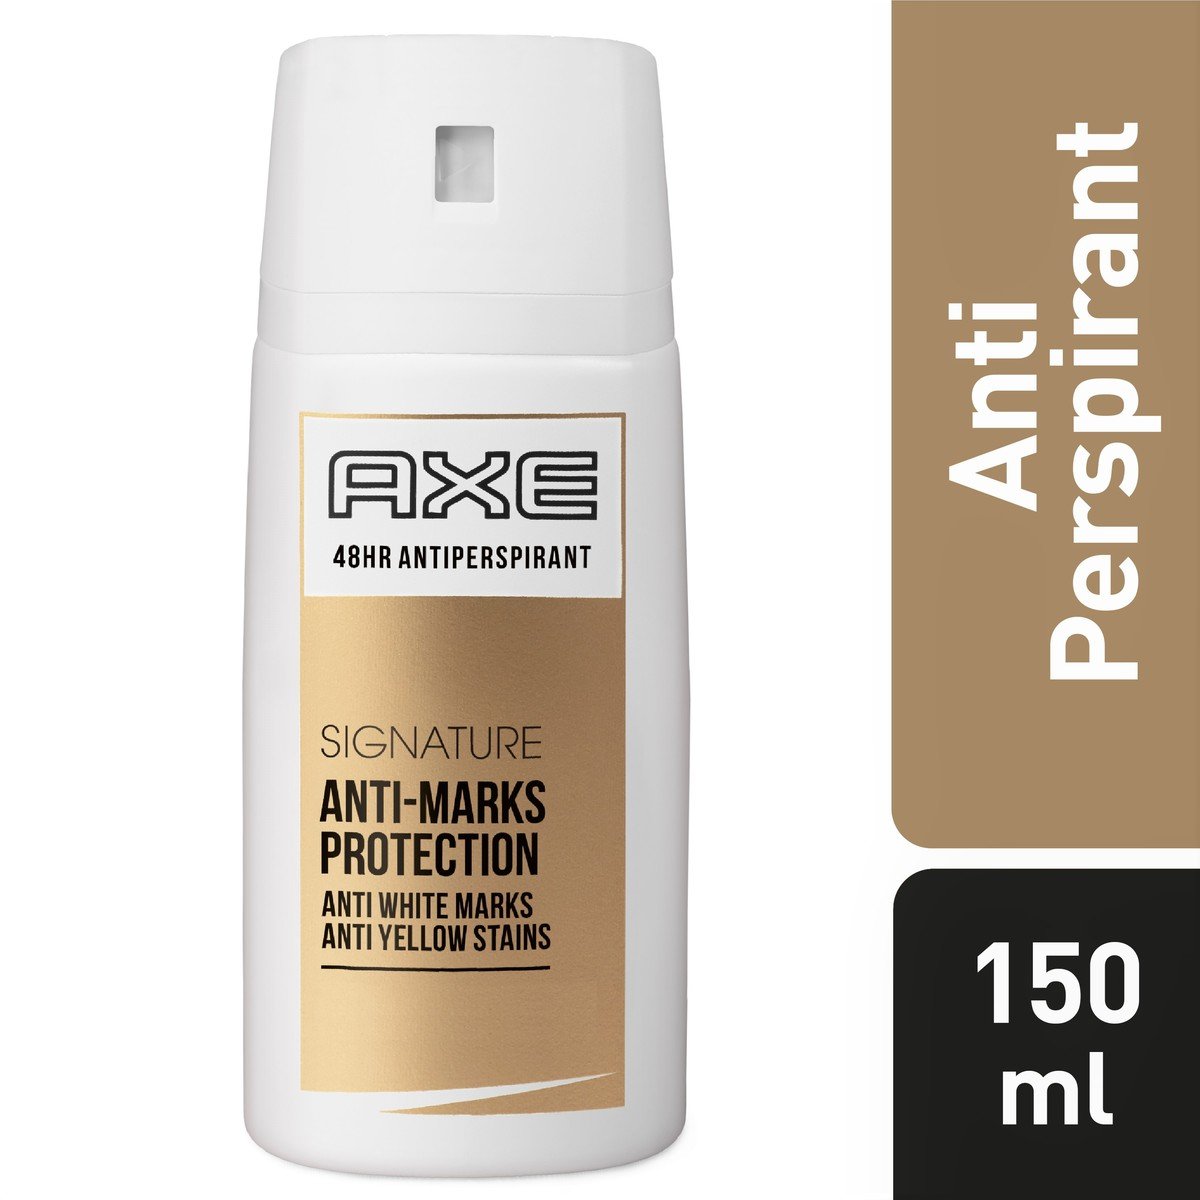 AXE Signature Anti-Marks Protection Antiperspirant Spray for Men 150ml